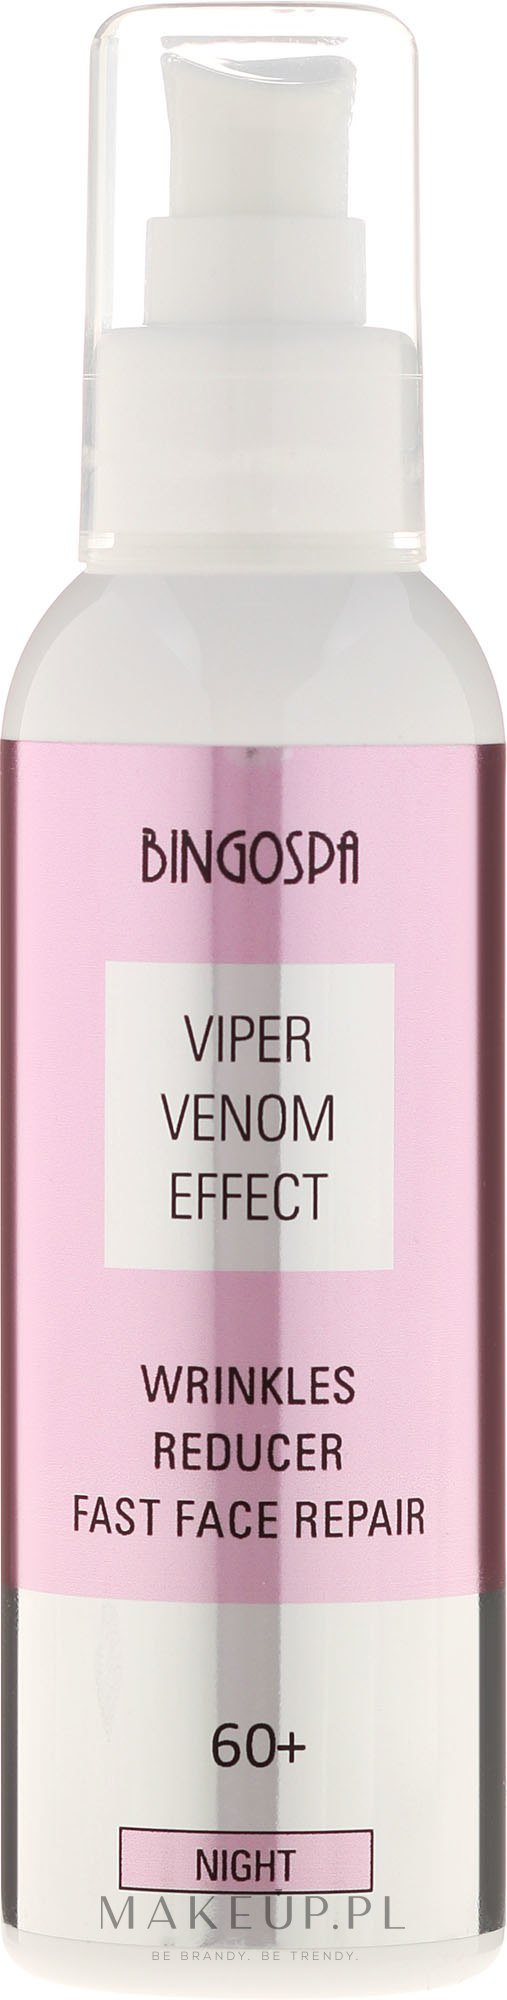 Reduktor zmarszczek na noc - Bingospa Viper Venom Effect Wrinkles Reducer Fast Face Repair — Zdjęcie 135 g